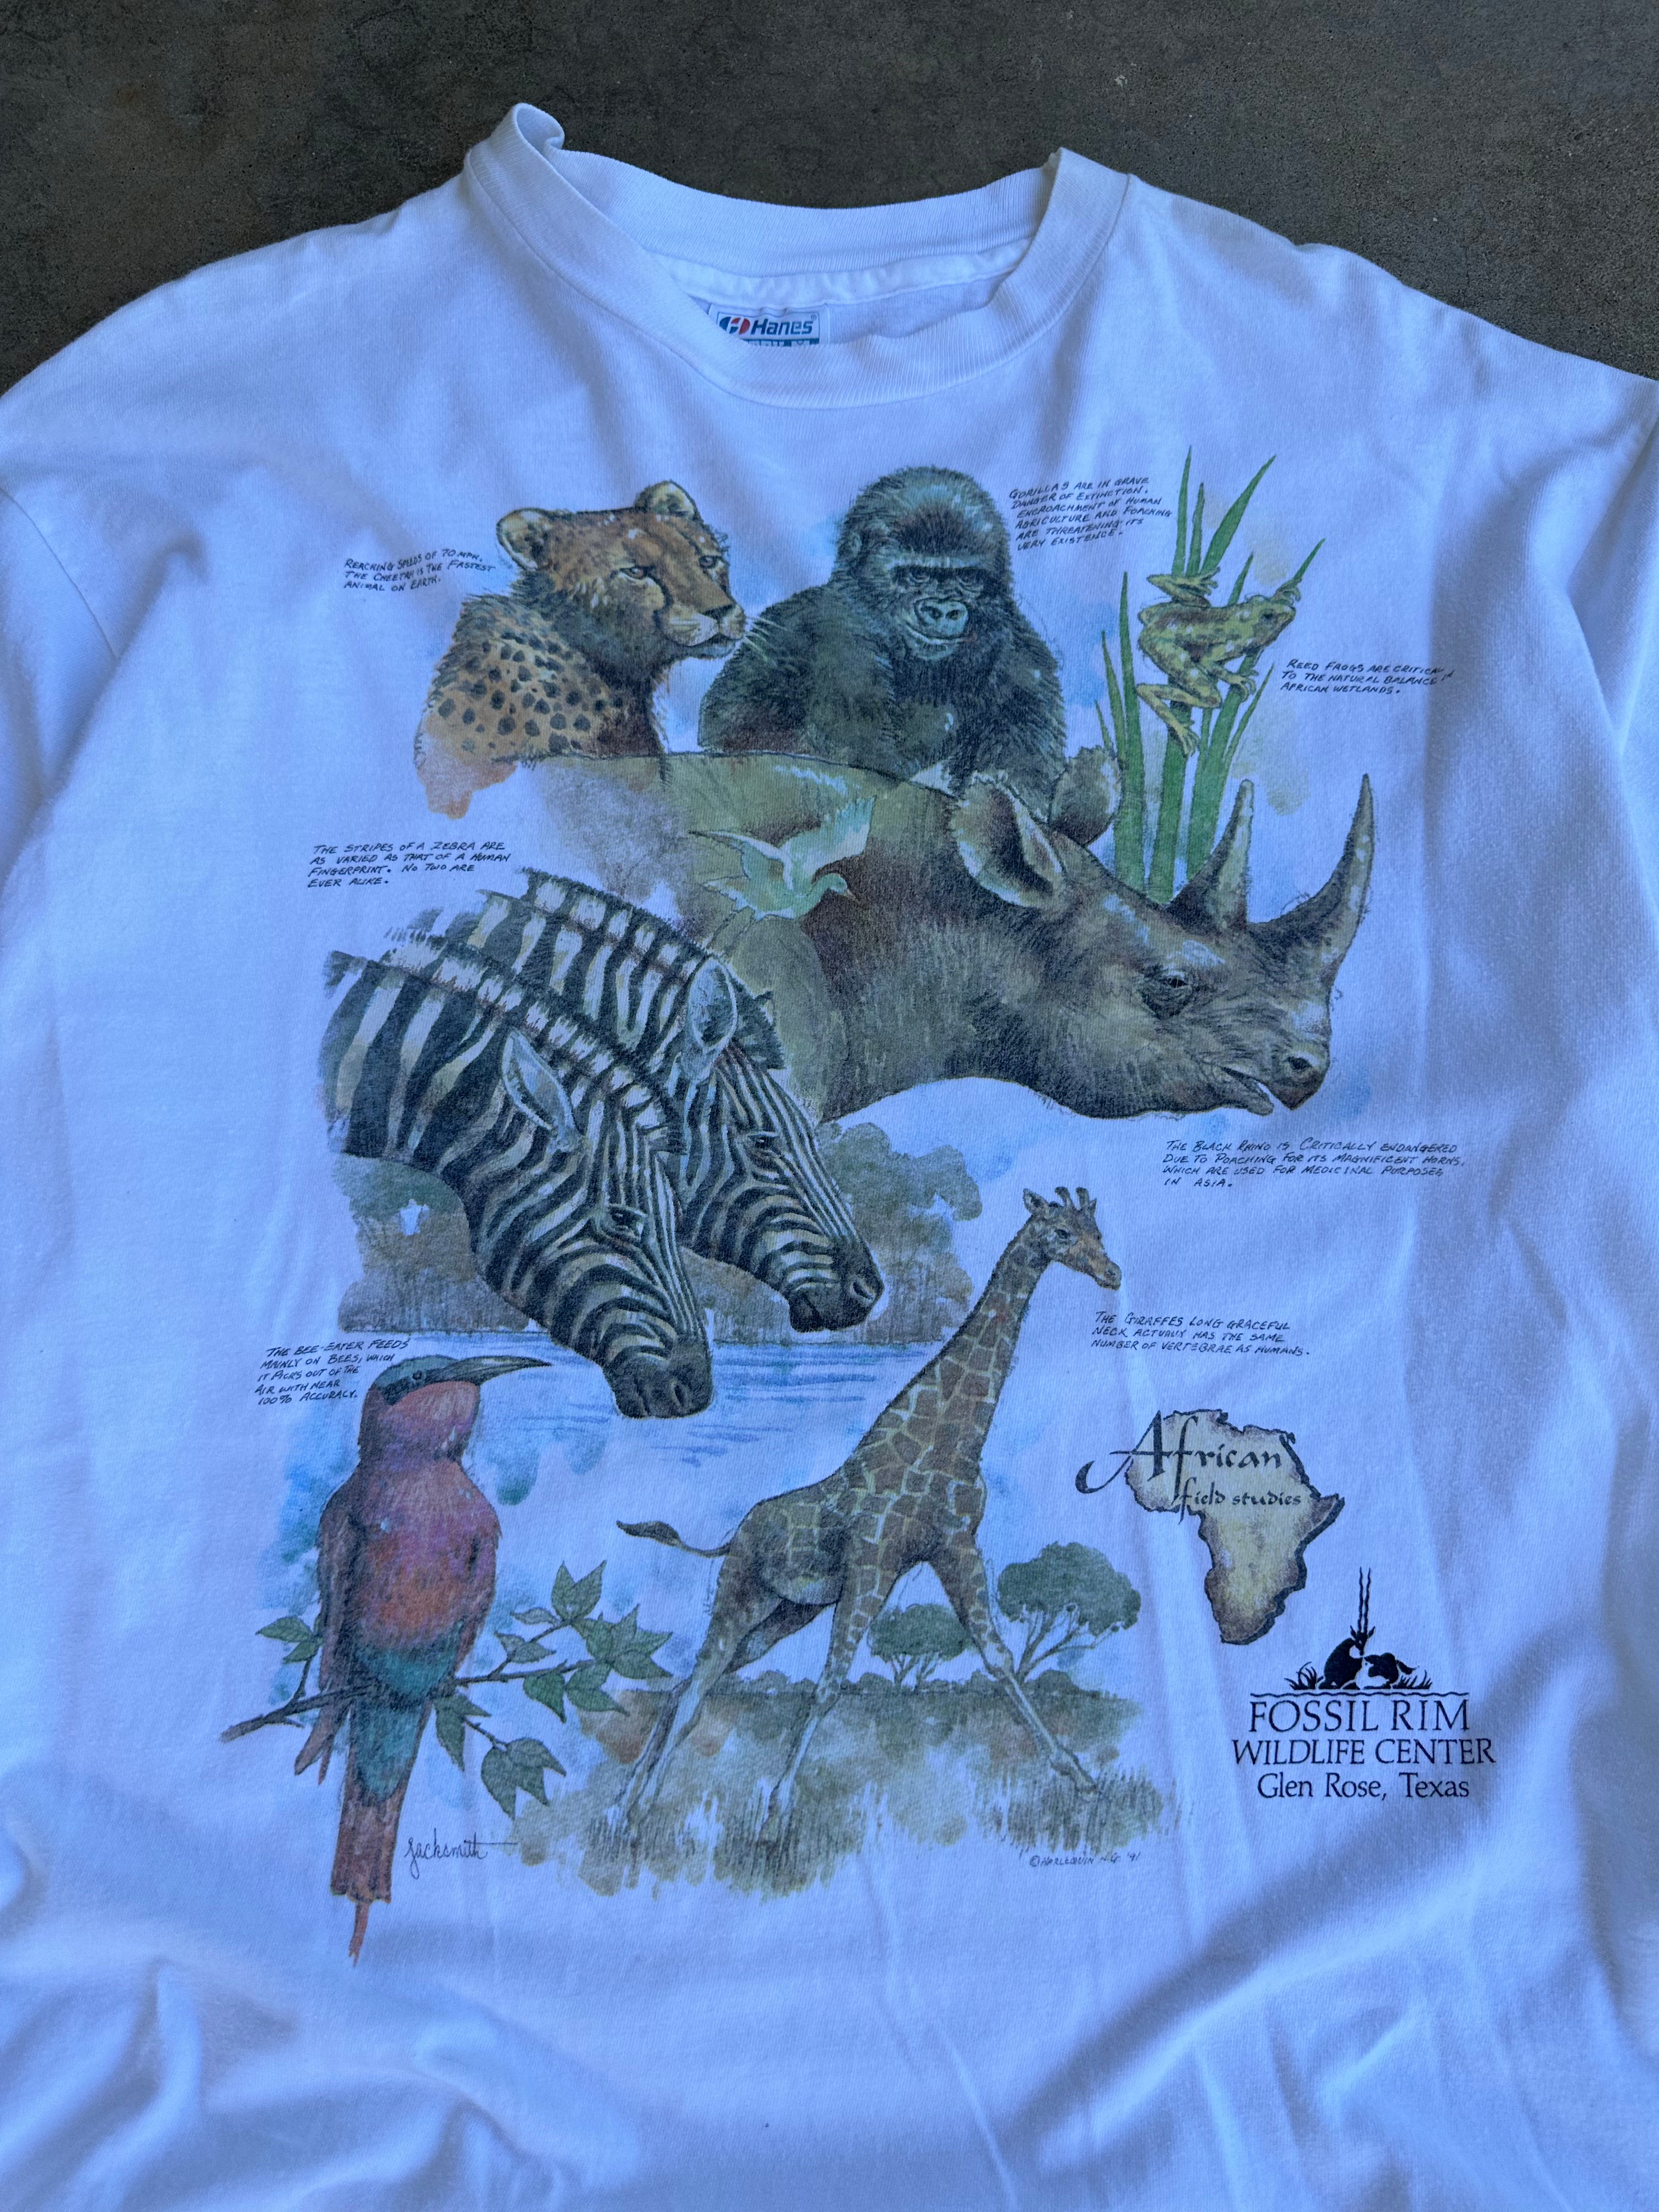 1991 Fossil Rim Wildlife Center Longsleeve T-Shirt (L)